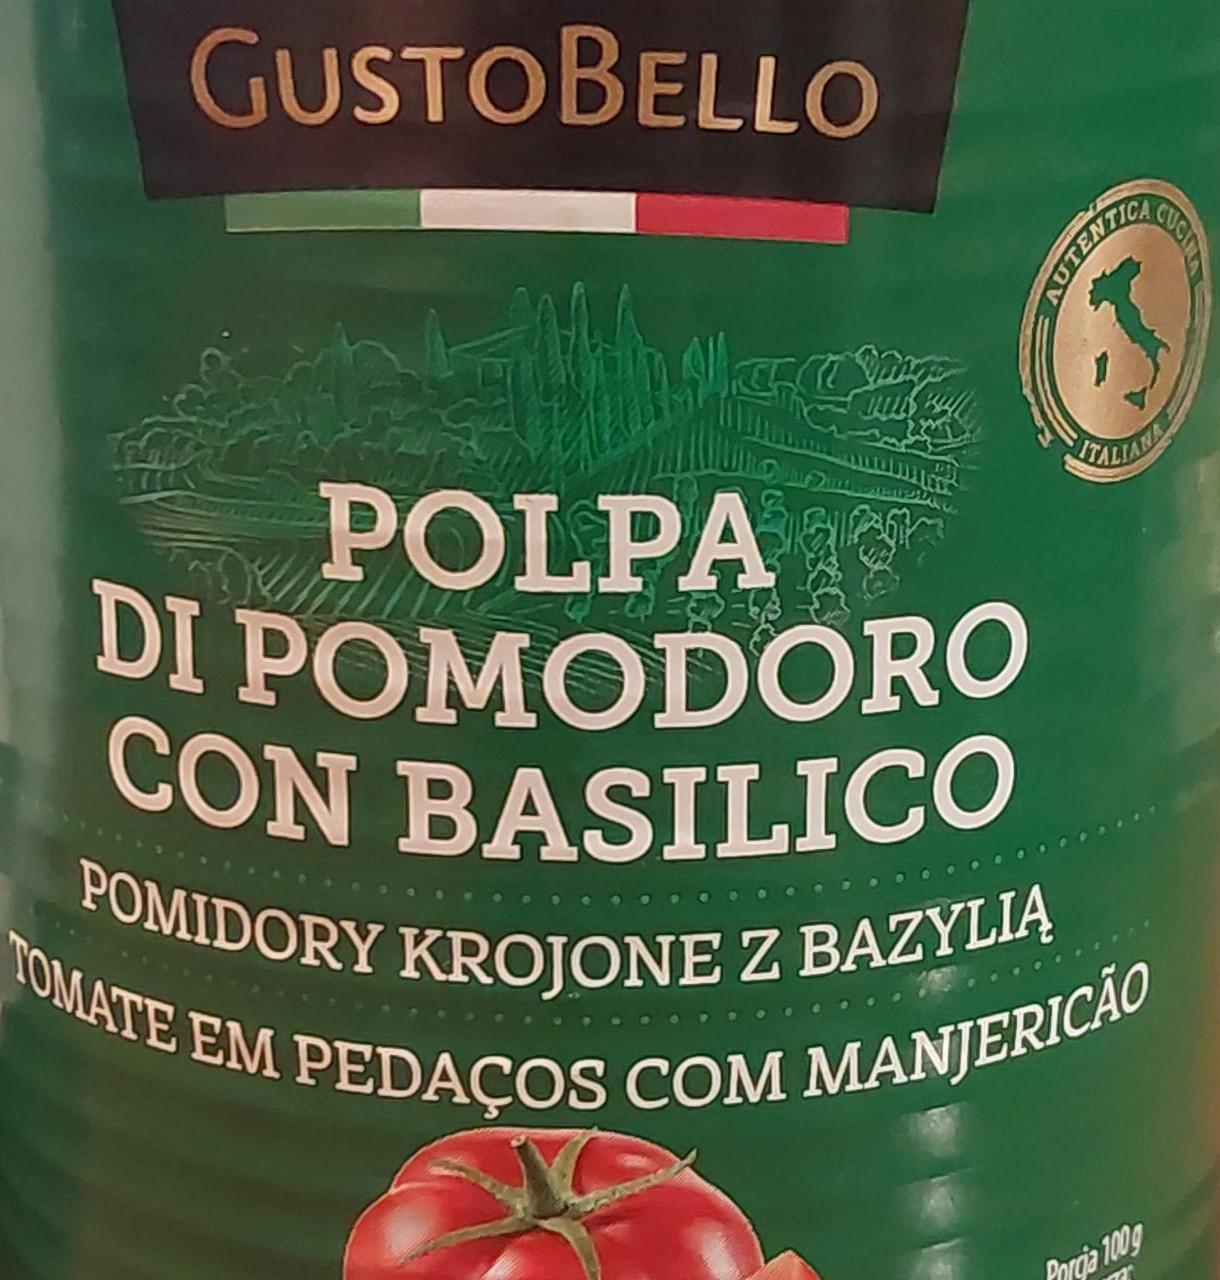 Zdjęcia - Gusto Bello polpa di pomodoro con basilico pomidory krojone z bazylią